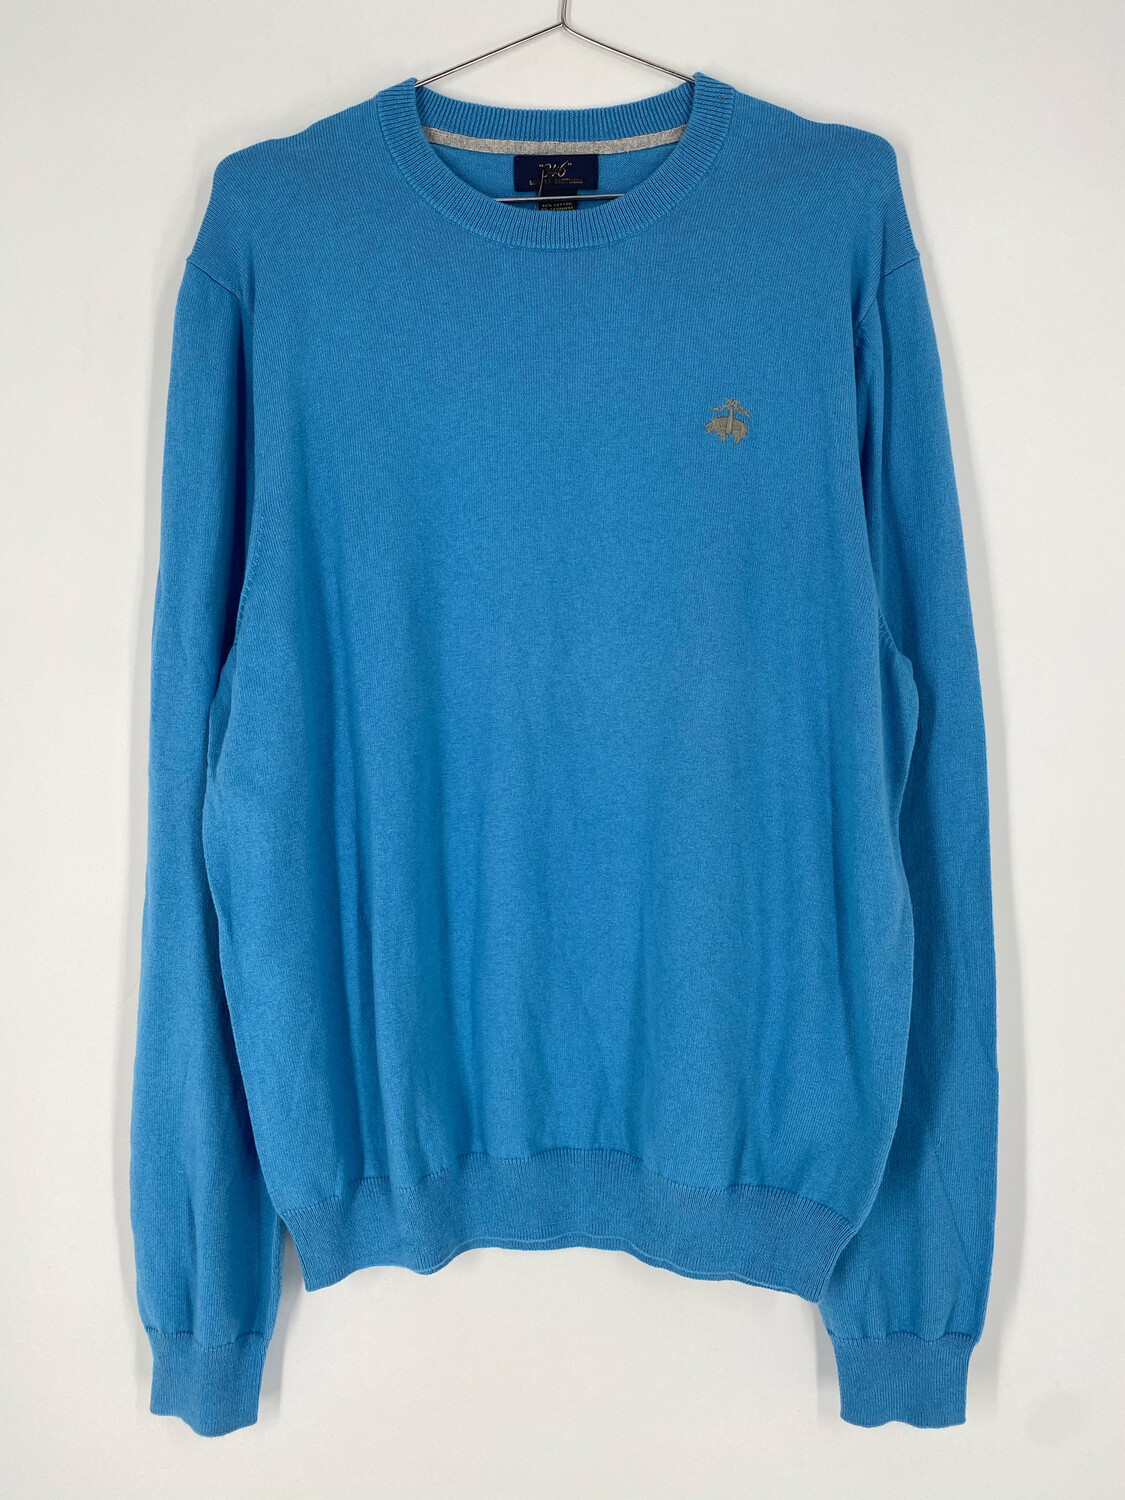 Brooks Brothers “346” Vintage Crewneck Blue Sweater Size M